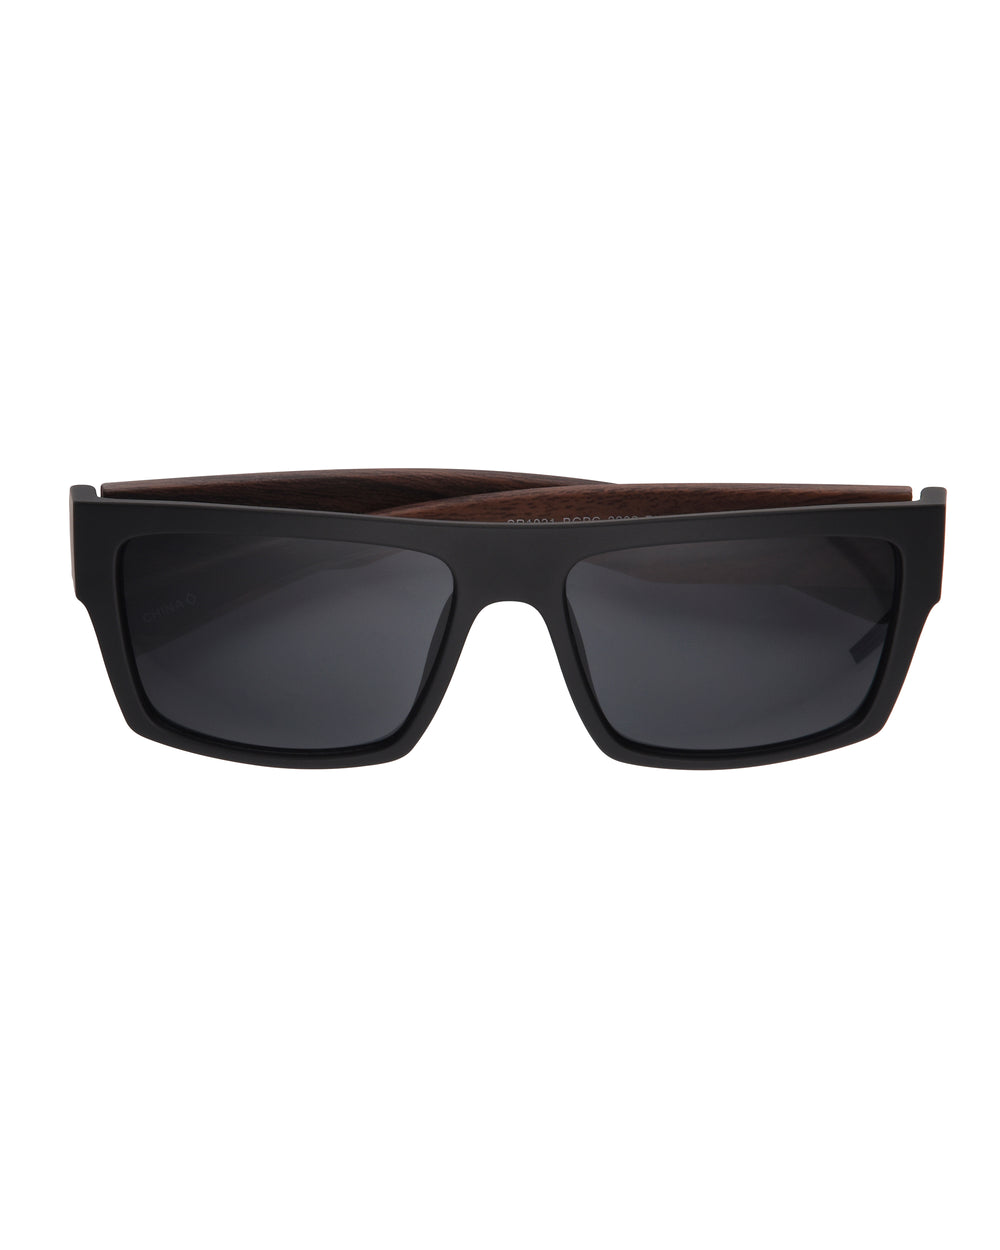 Men's Reggie Rectangular Sunglasses - Black/Dark Brown